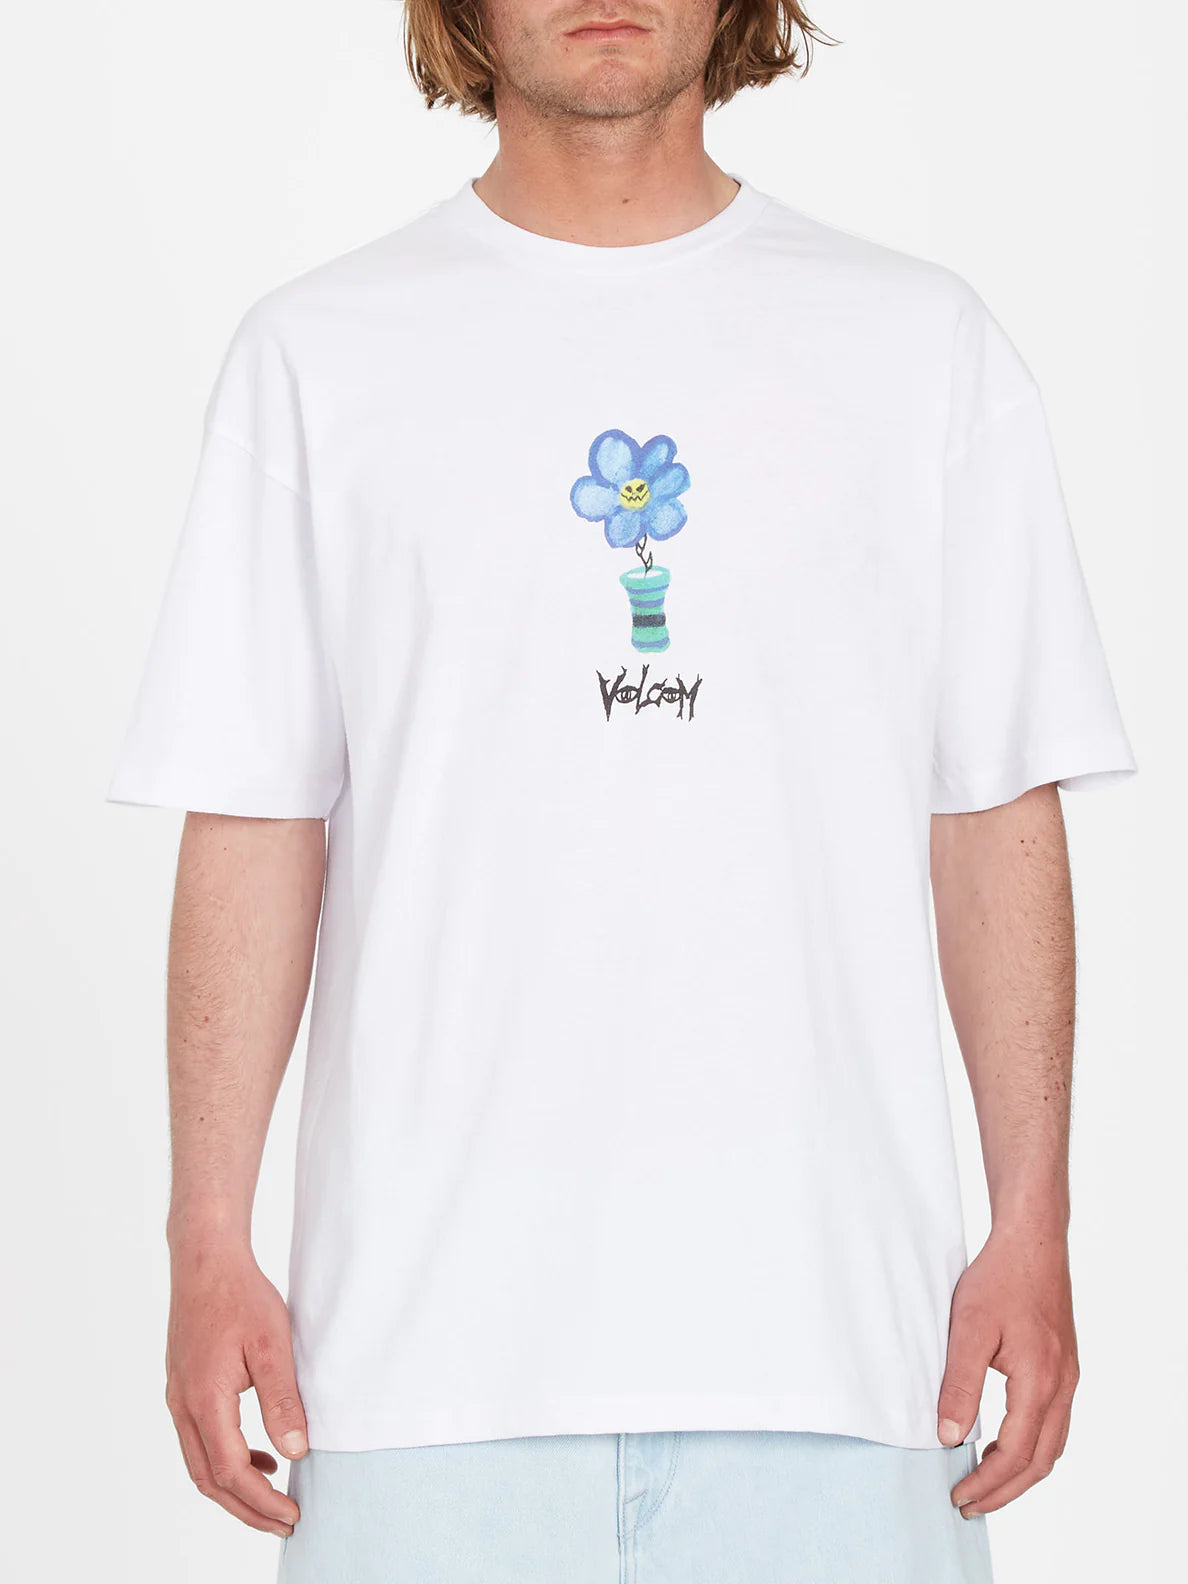 Camiseta Volcom Issamtherapy - White | Camisetas de hombre | Camisetas manga corta de hombre | Volcom Shop | surfdevils.com